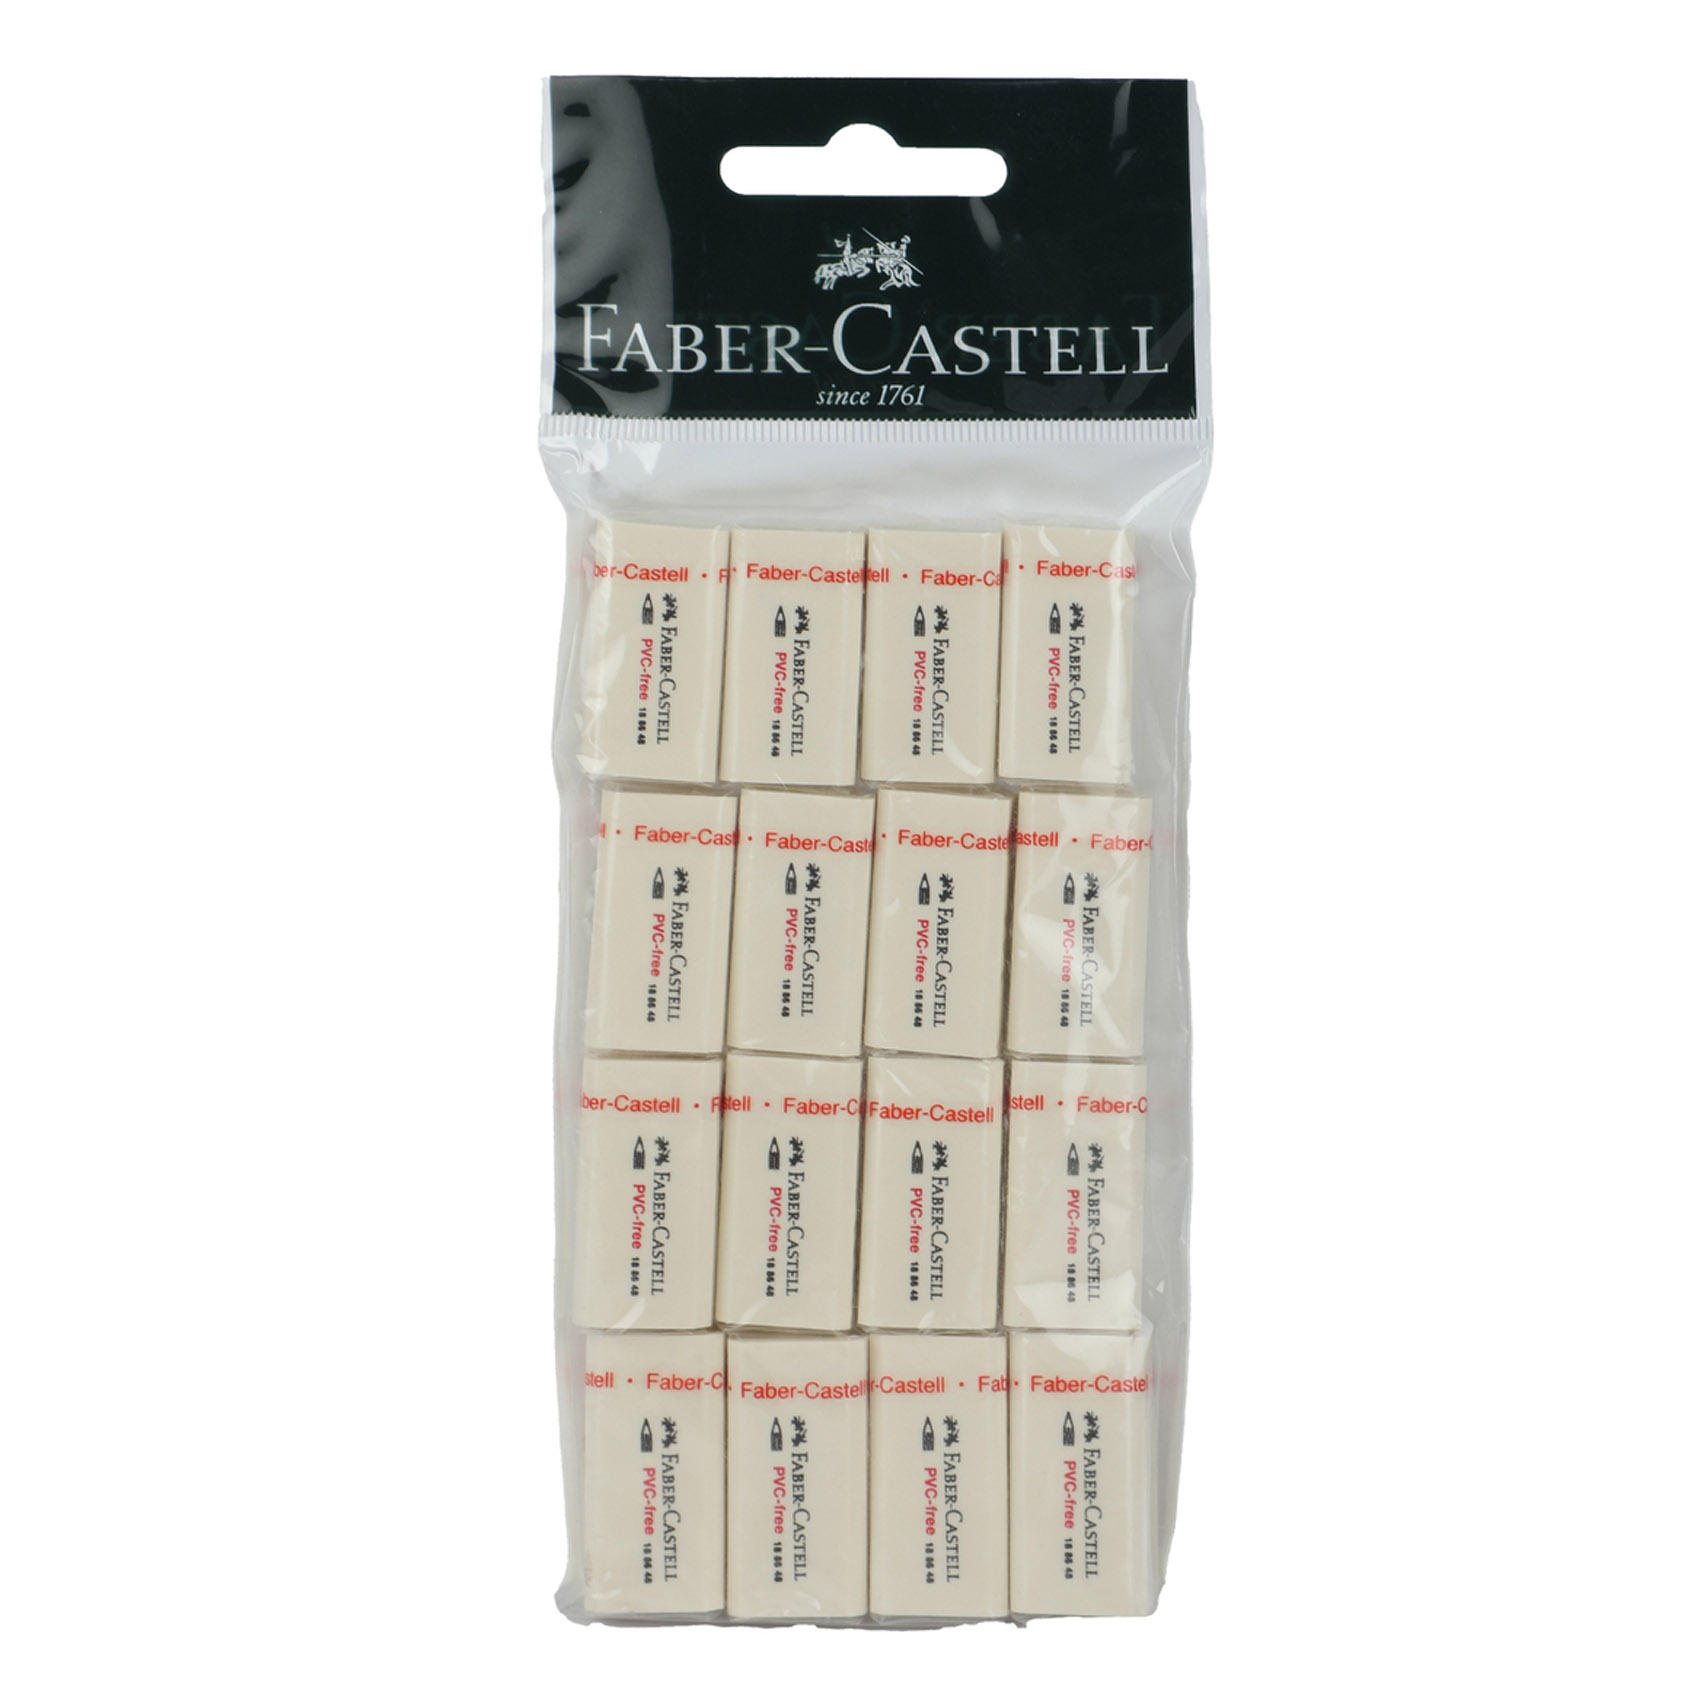 Faber-Castell PVC Free Eraser Set White 16 PCS